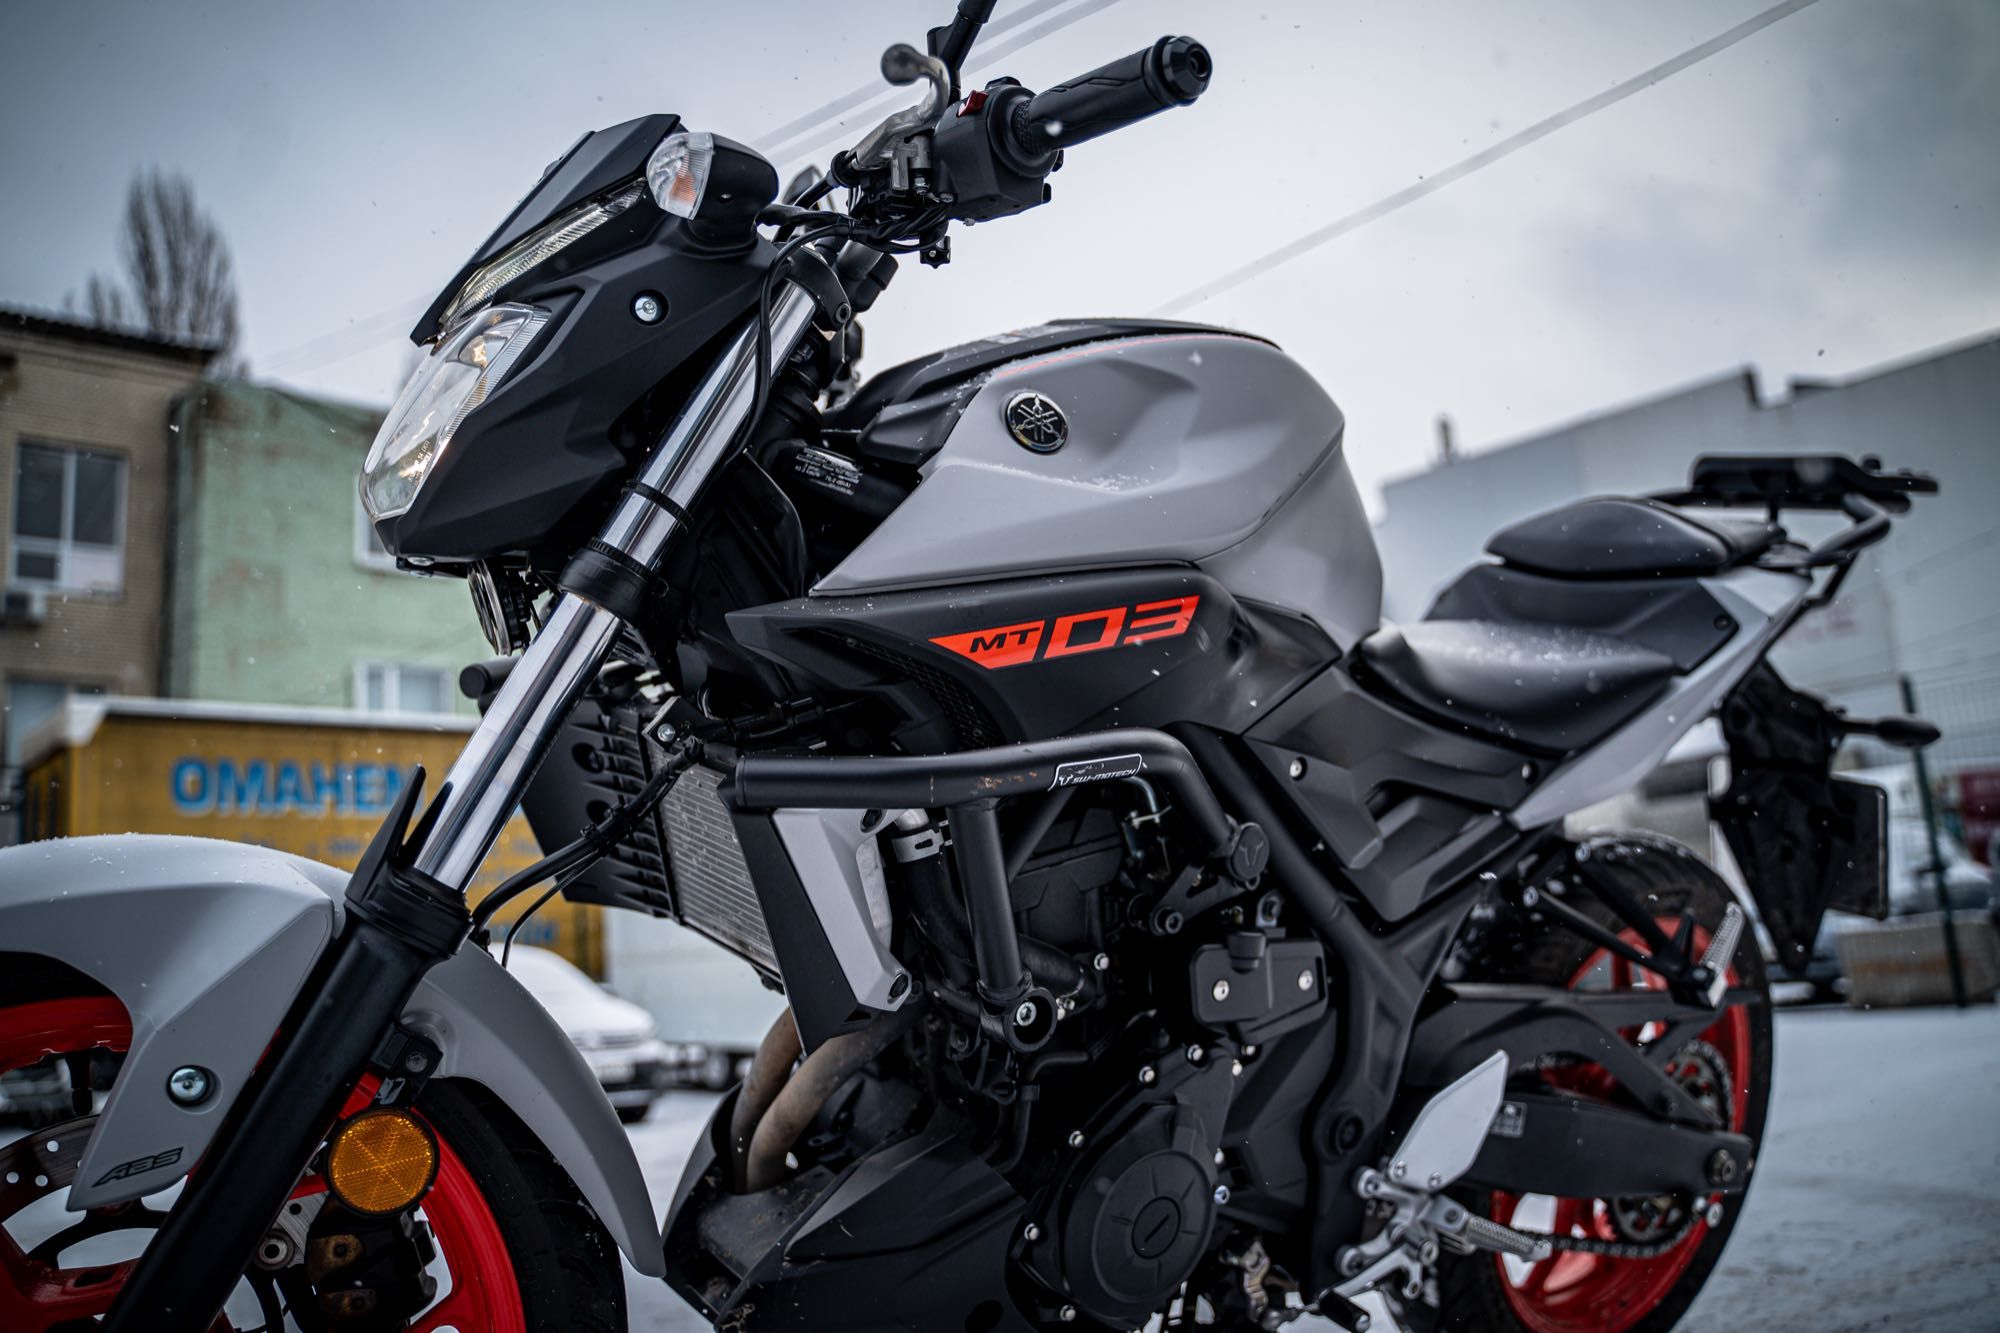 Yamaha MT-03 Ямаха MT-03 2019год
Официальный мотоцикл